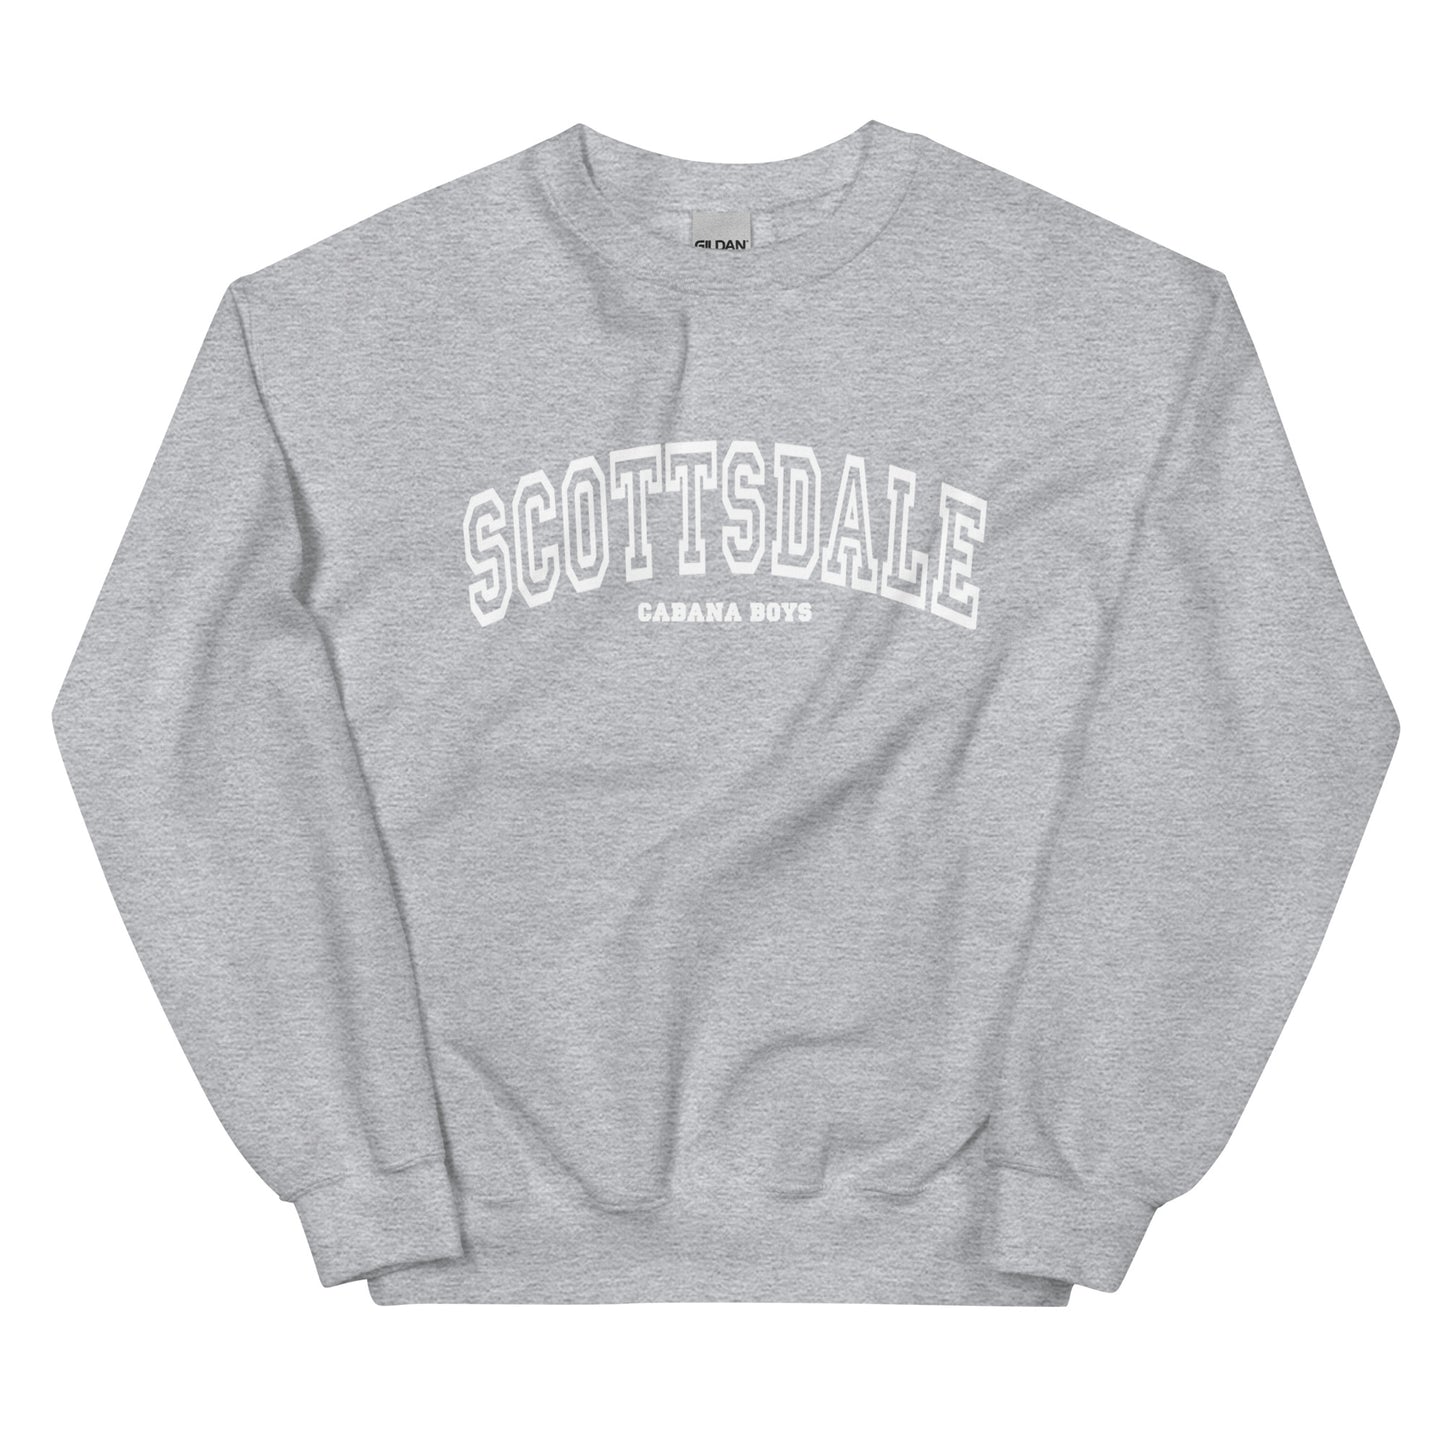 Collegiate Collection Scottsdale Sweatshirt